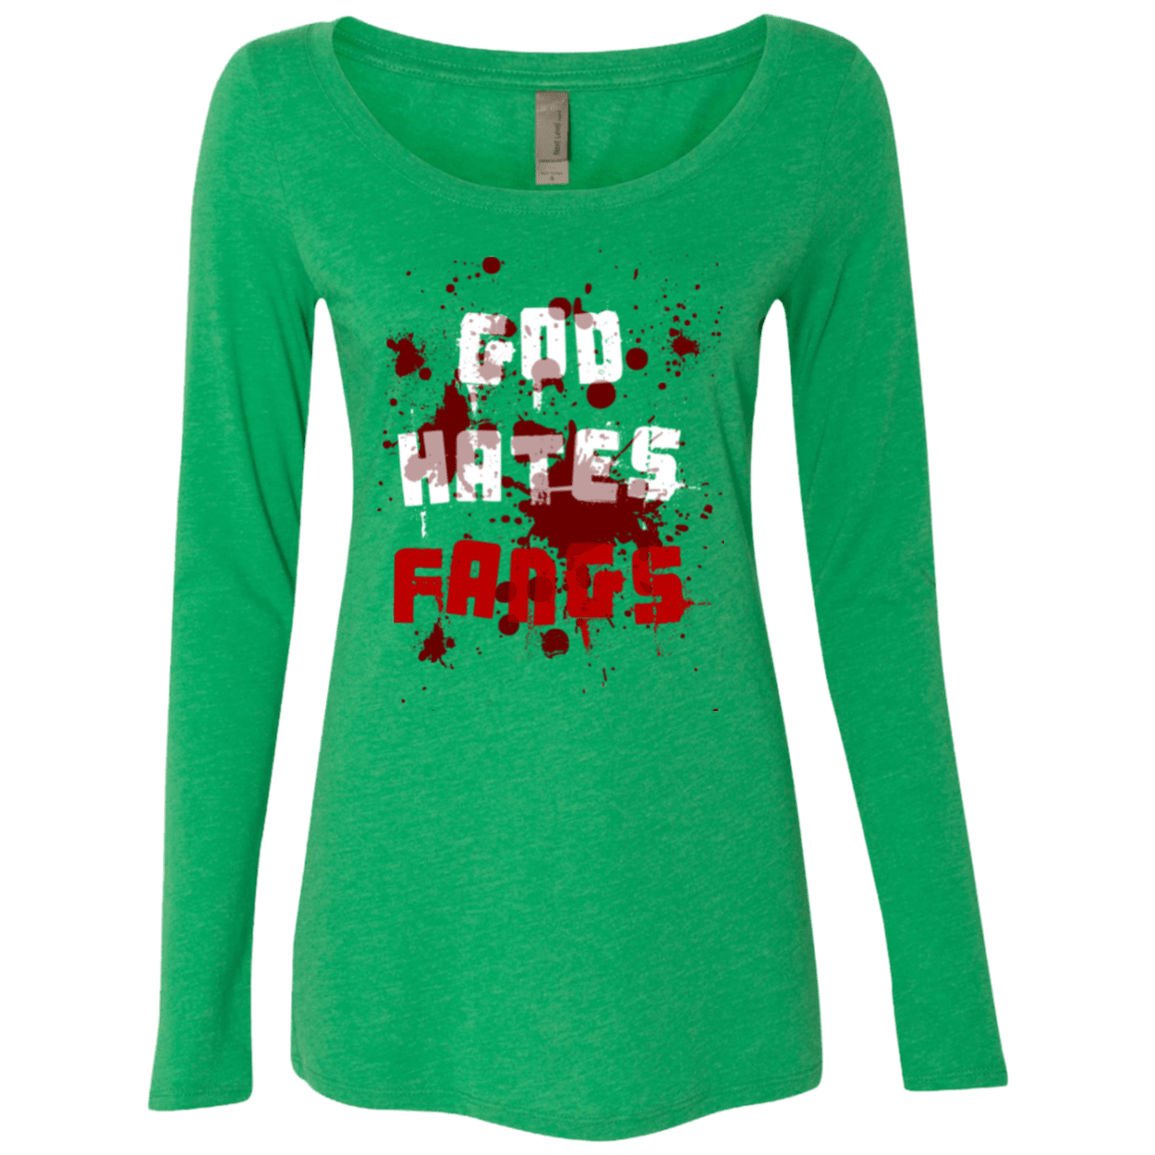 T-Shirts Envy / Small God hates fangs Women's Triblend Long Sleeve Shirt